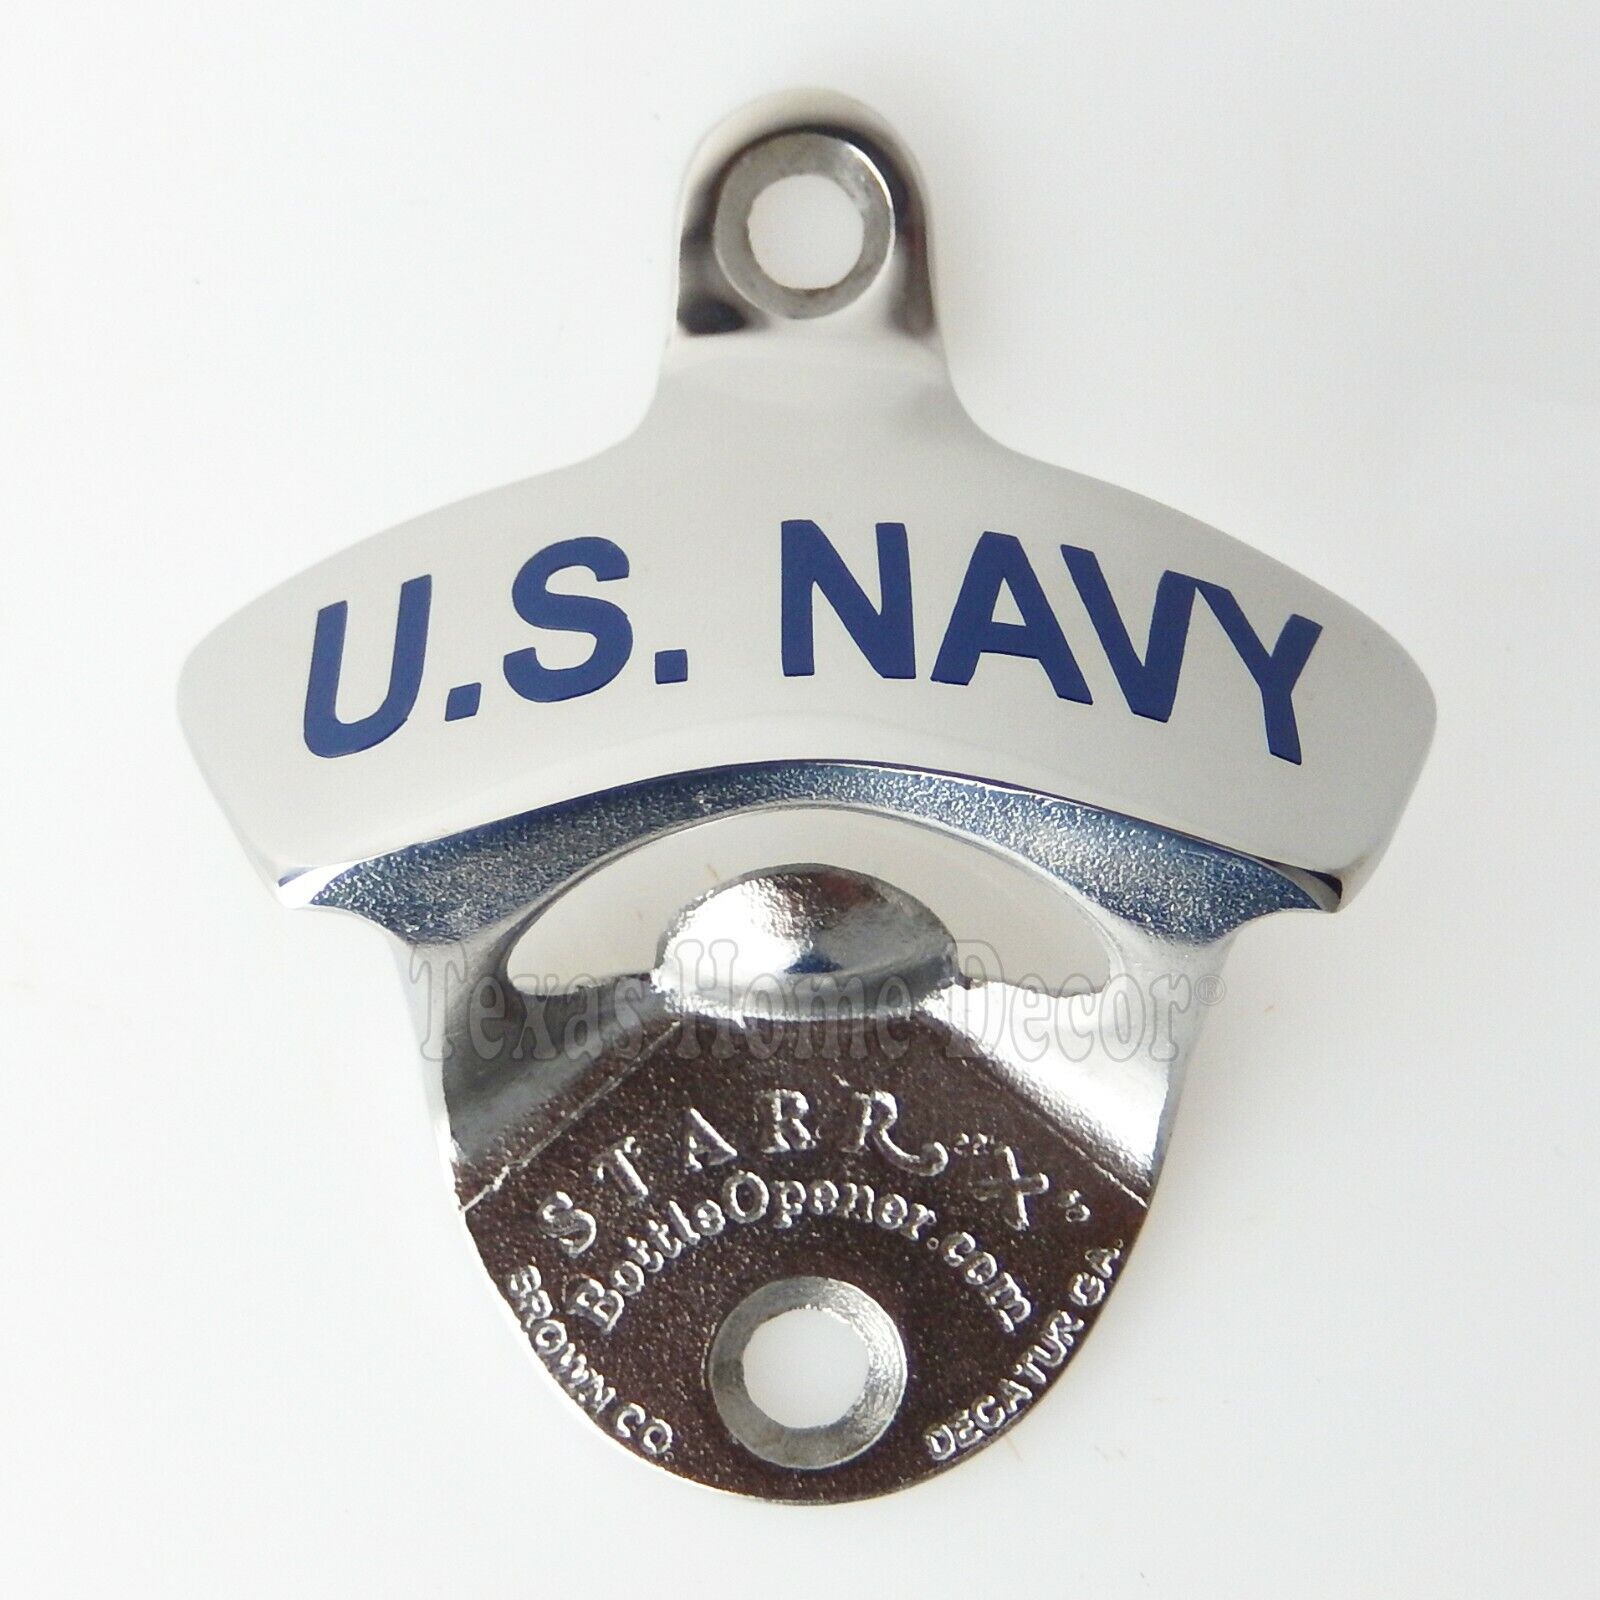 U.S. Navy Beer Bottle Opener Solid Polished Stainless Steel Wall Mounted